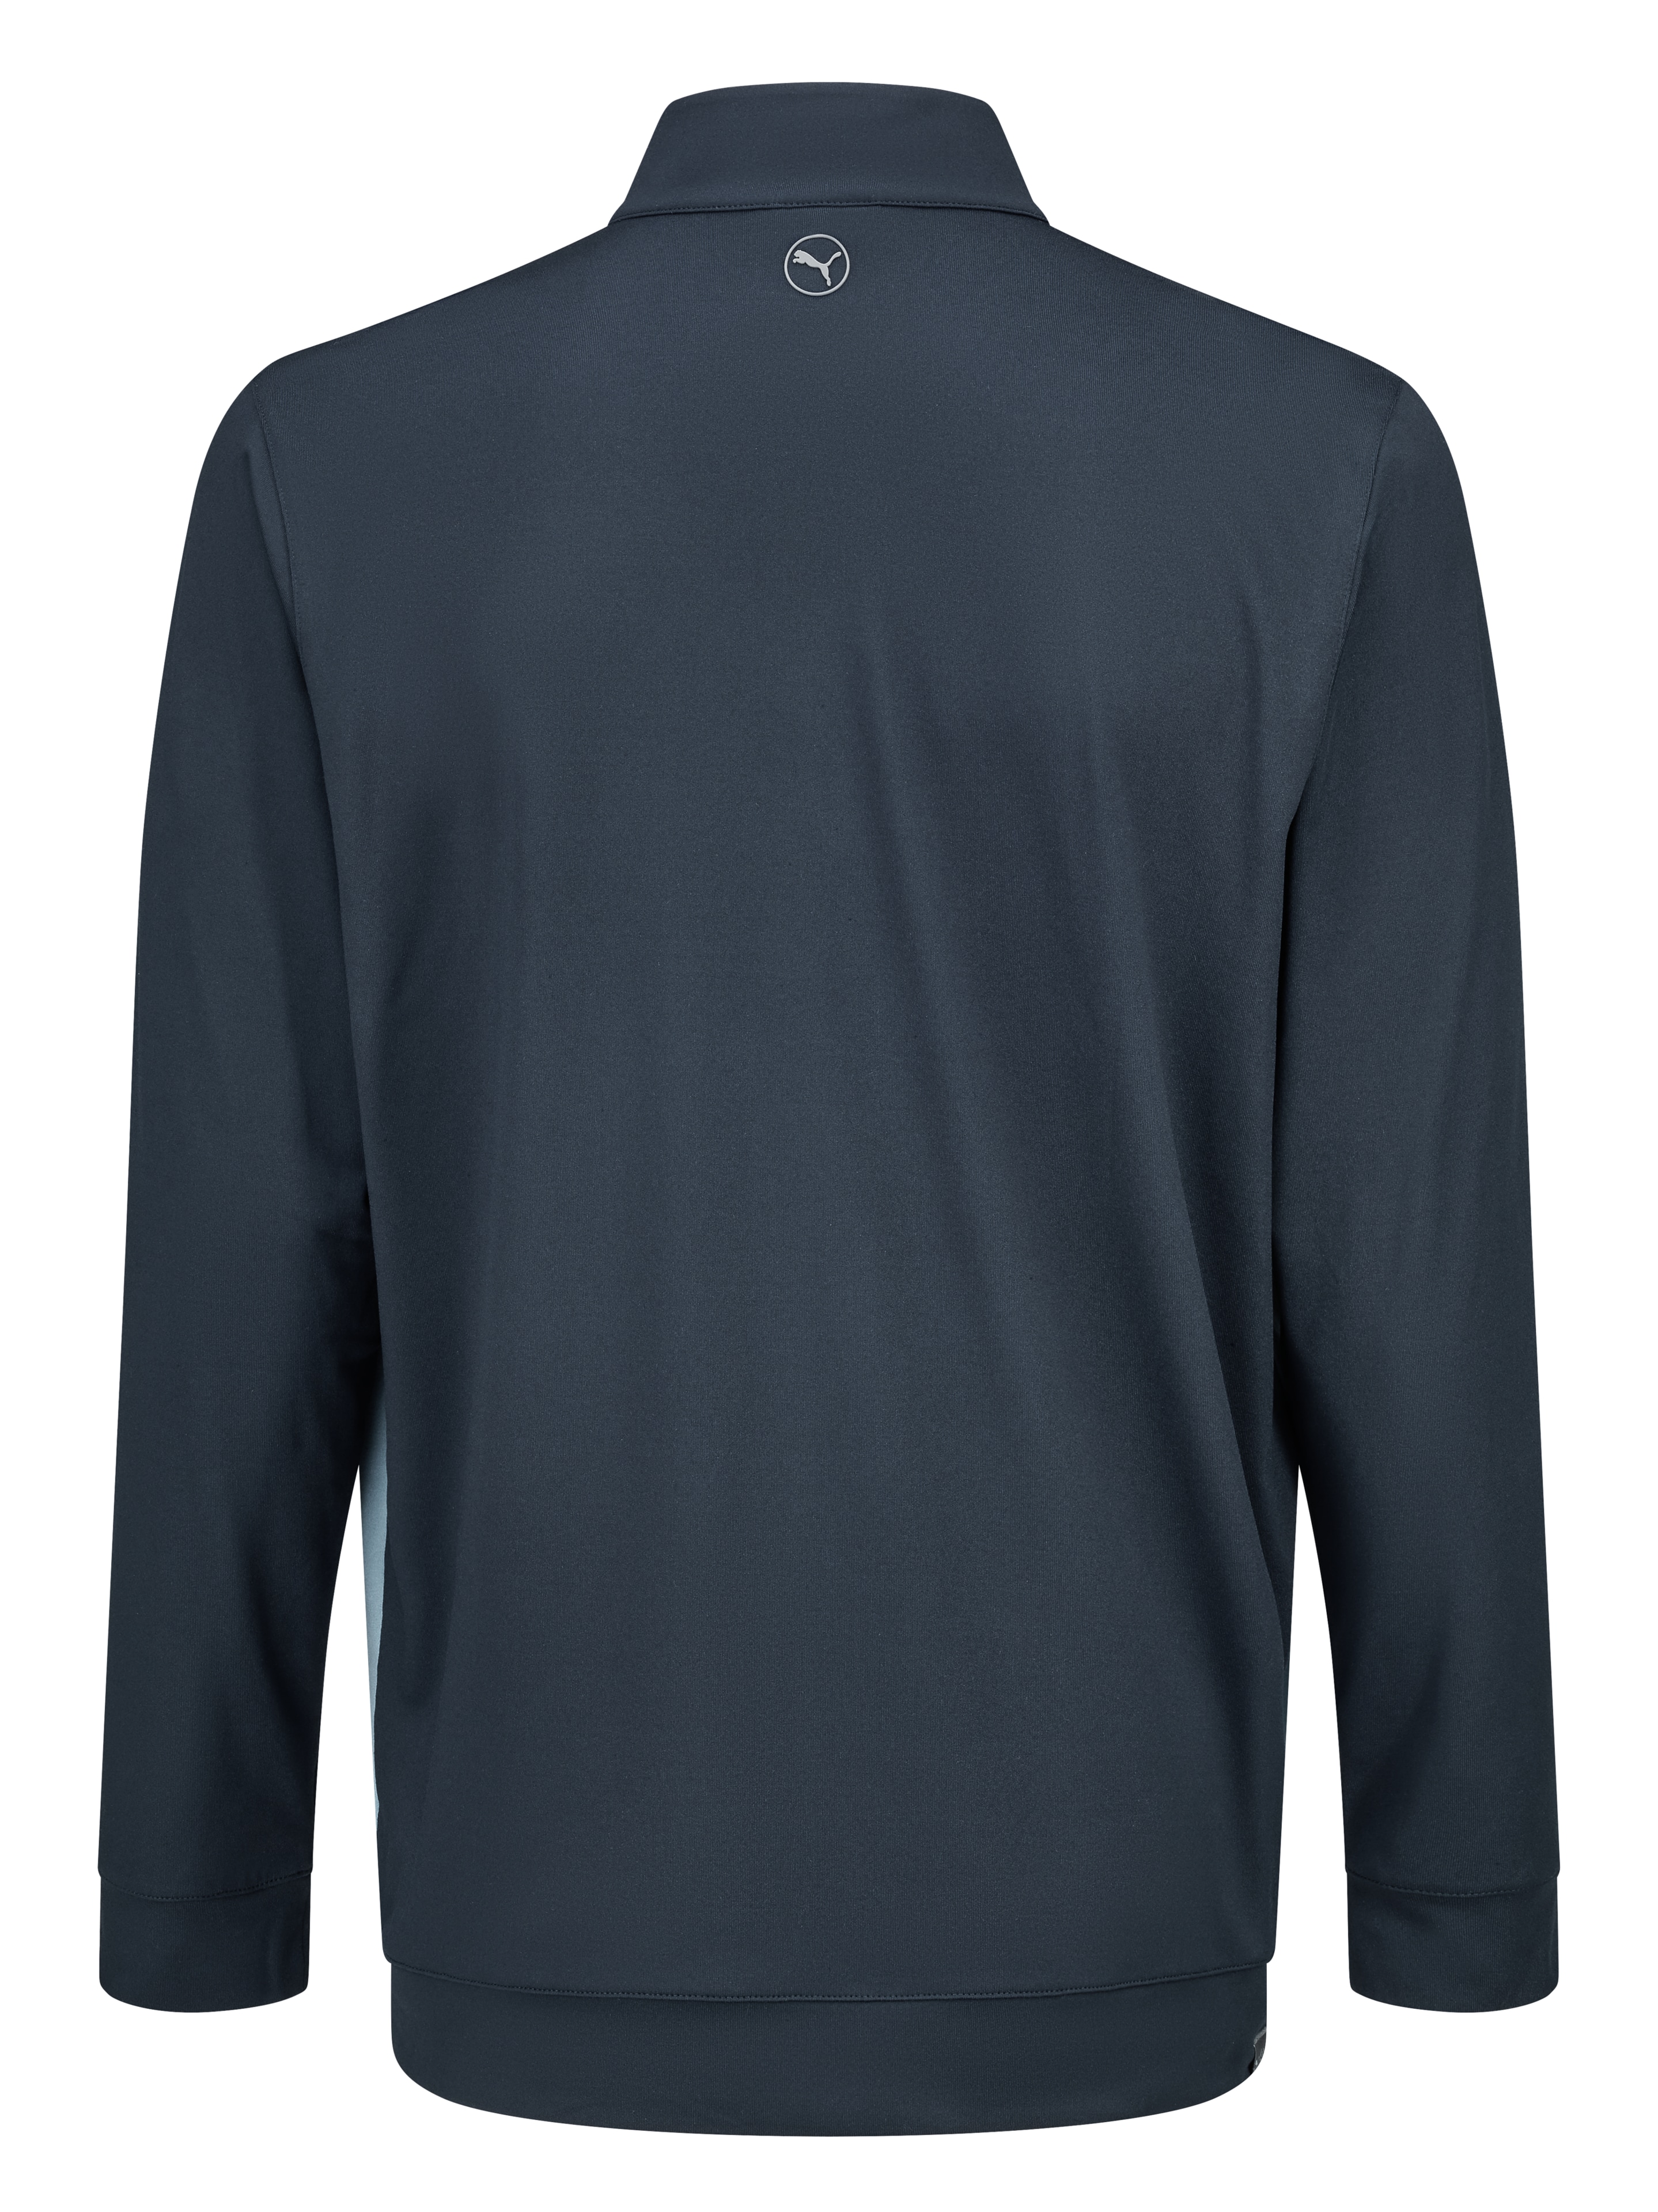 Golf-Sweater Herren, Pure Colorblock - navy / Zen Blue / white, M